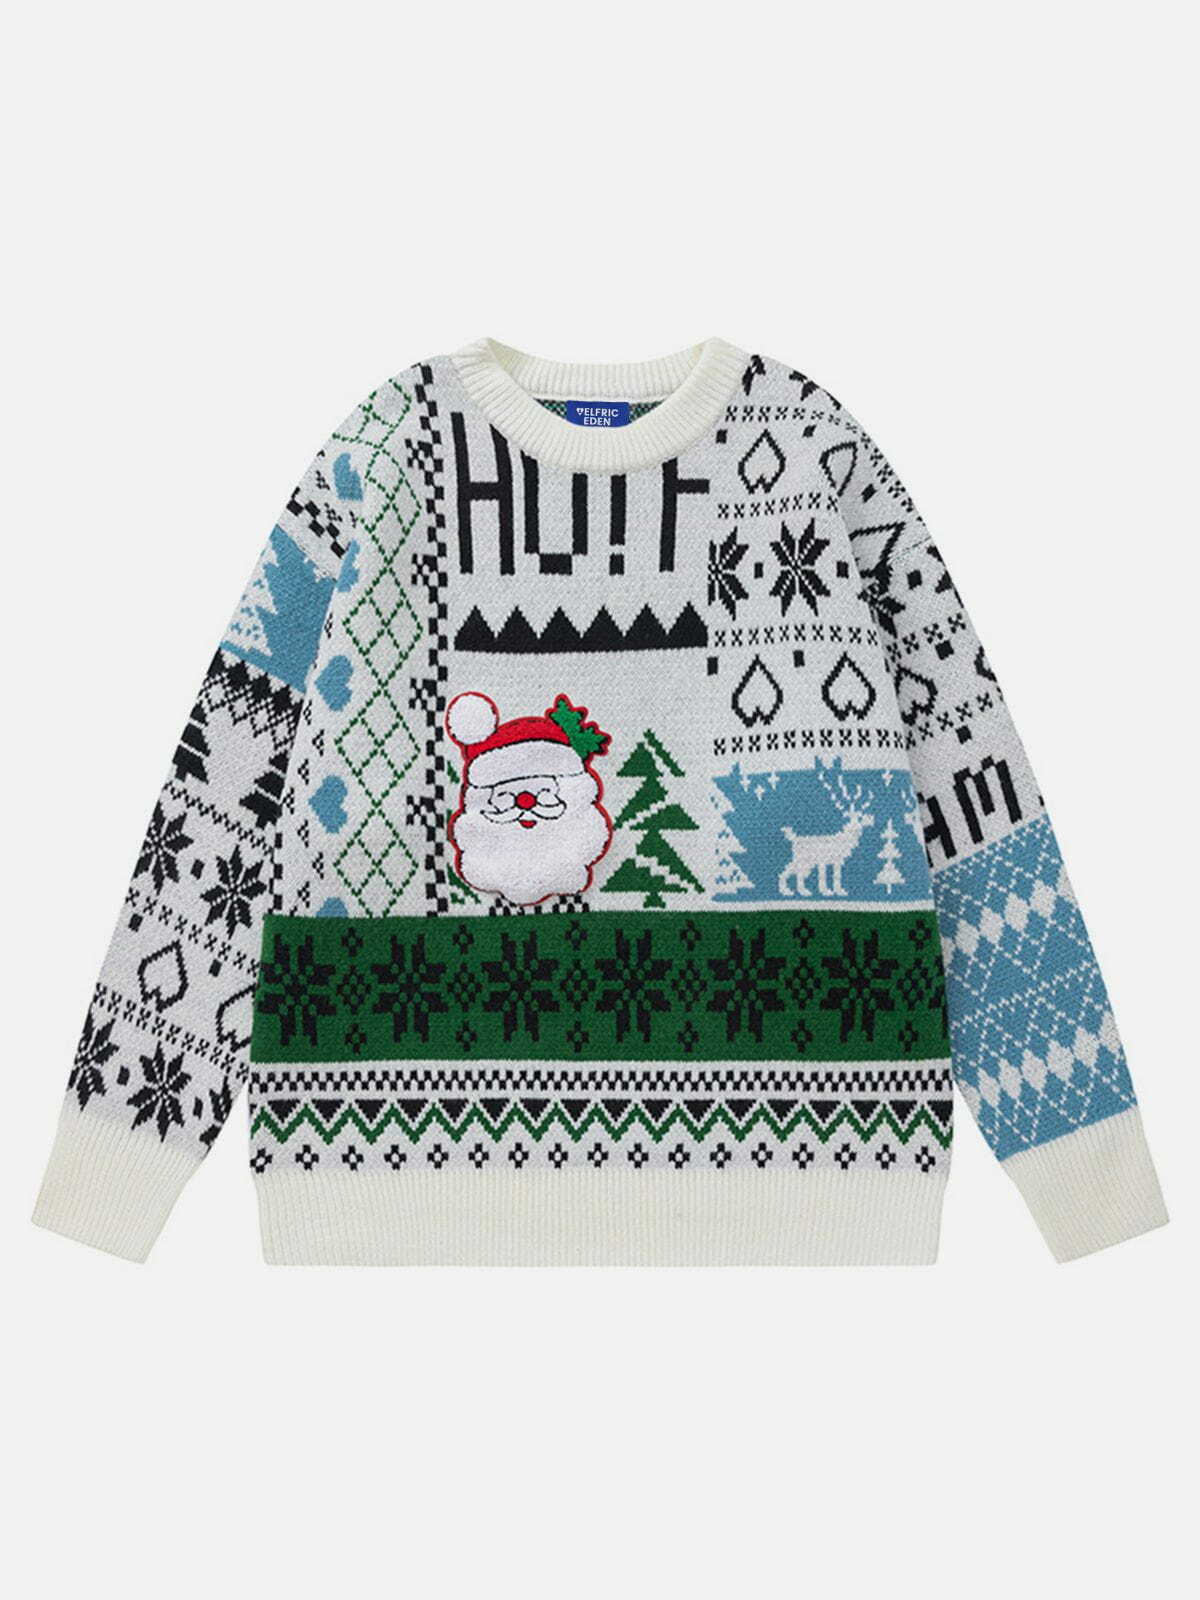 retro snowflake sweater festive & edgy winter fashion 4935